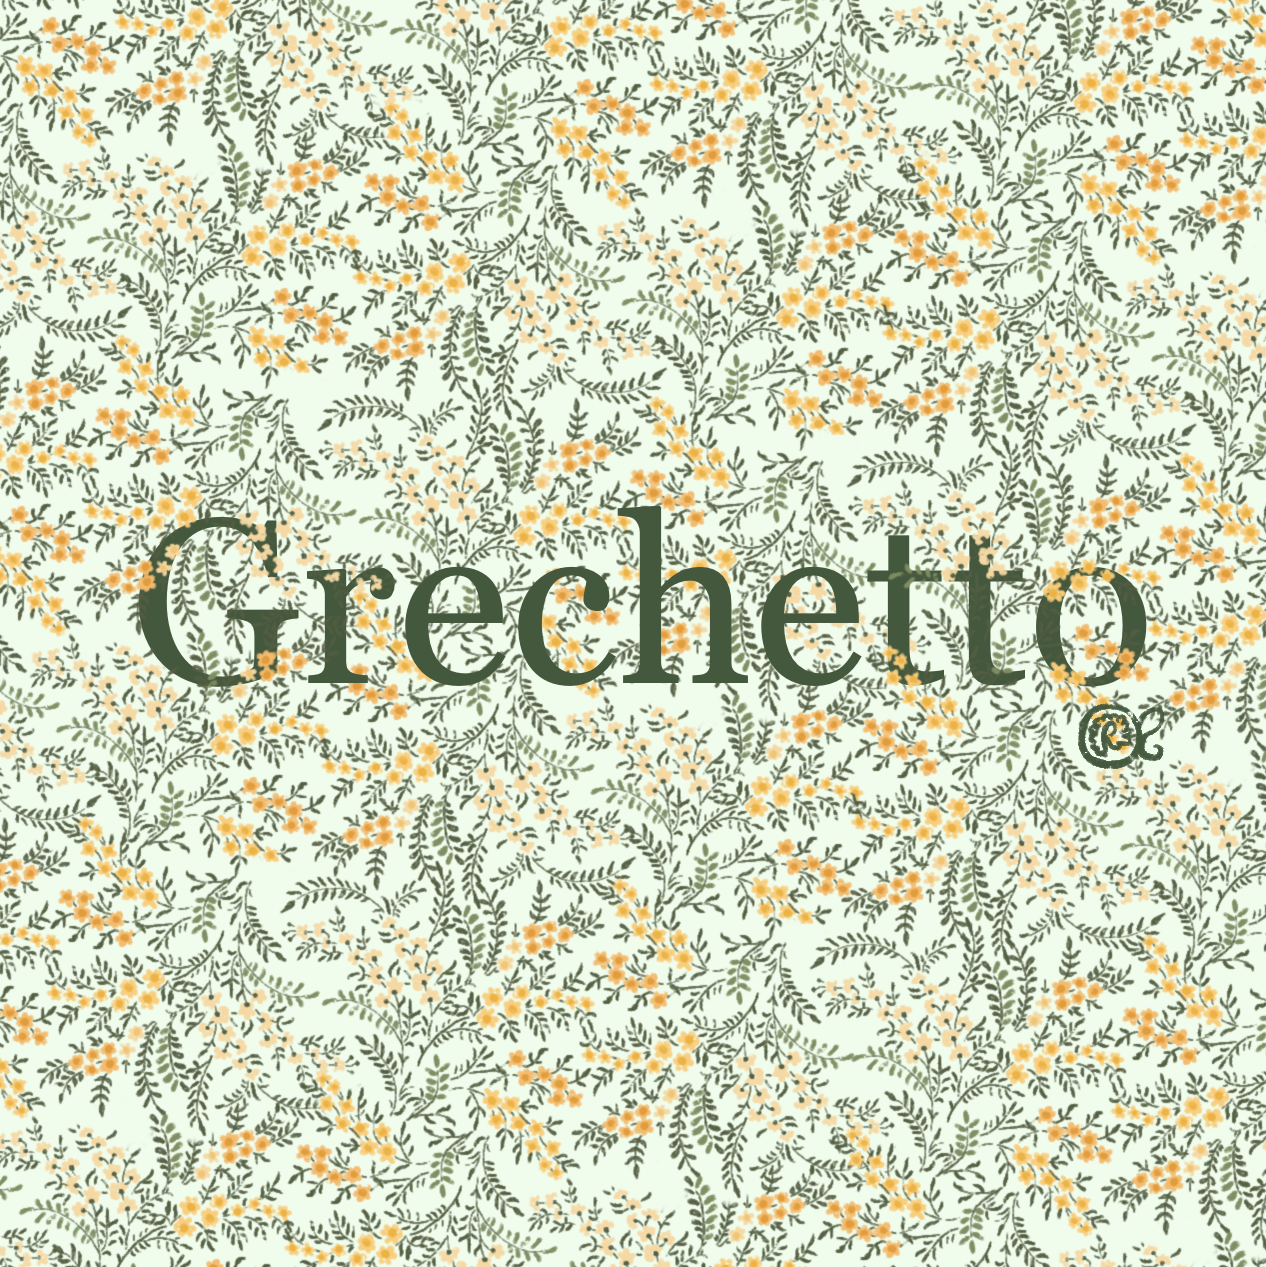 Grechetto